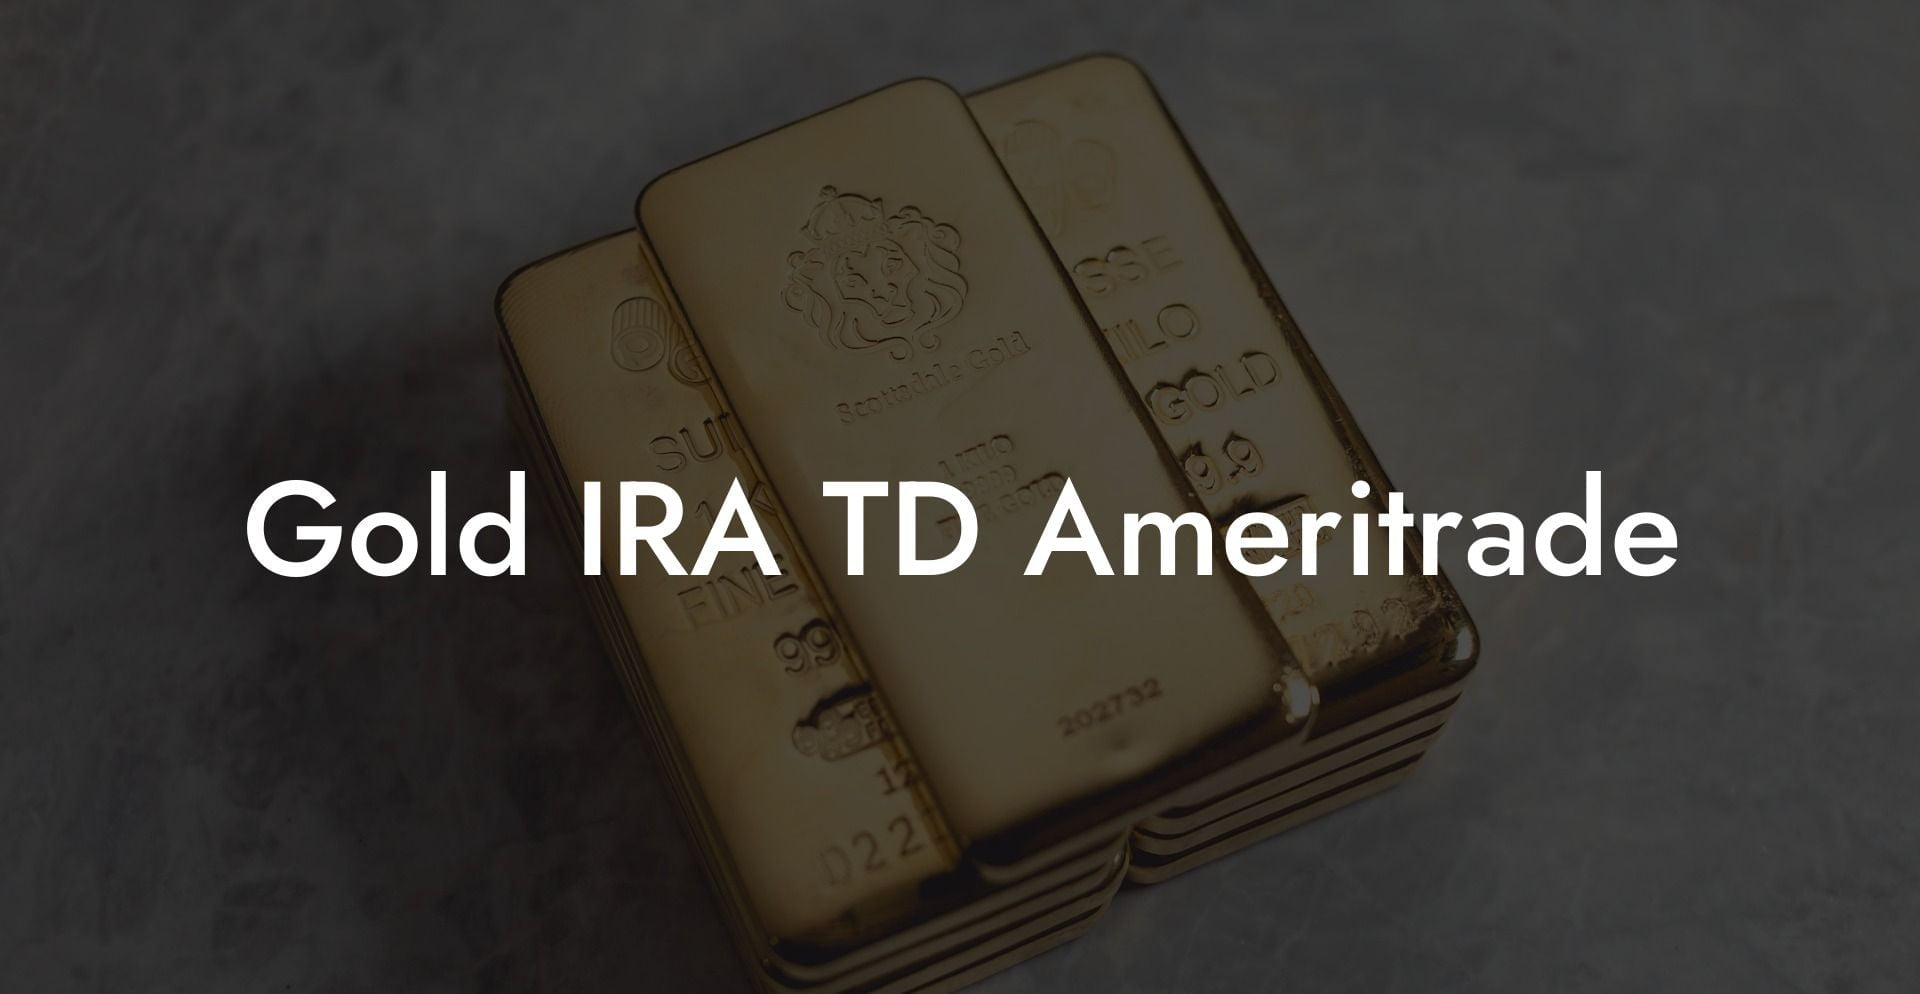 Gold IRA TD Ameritrade